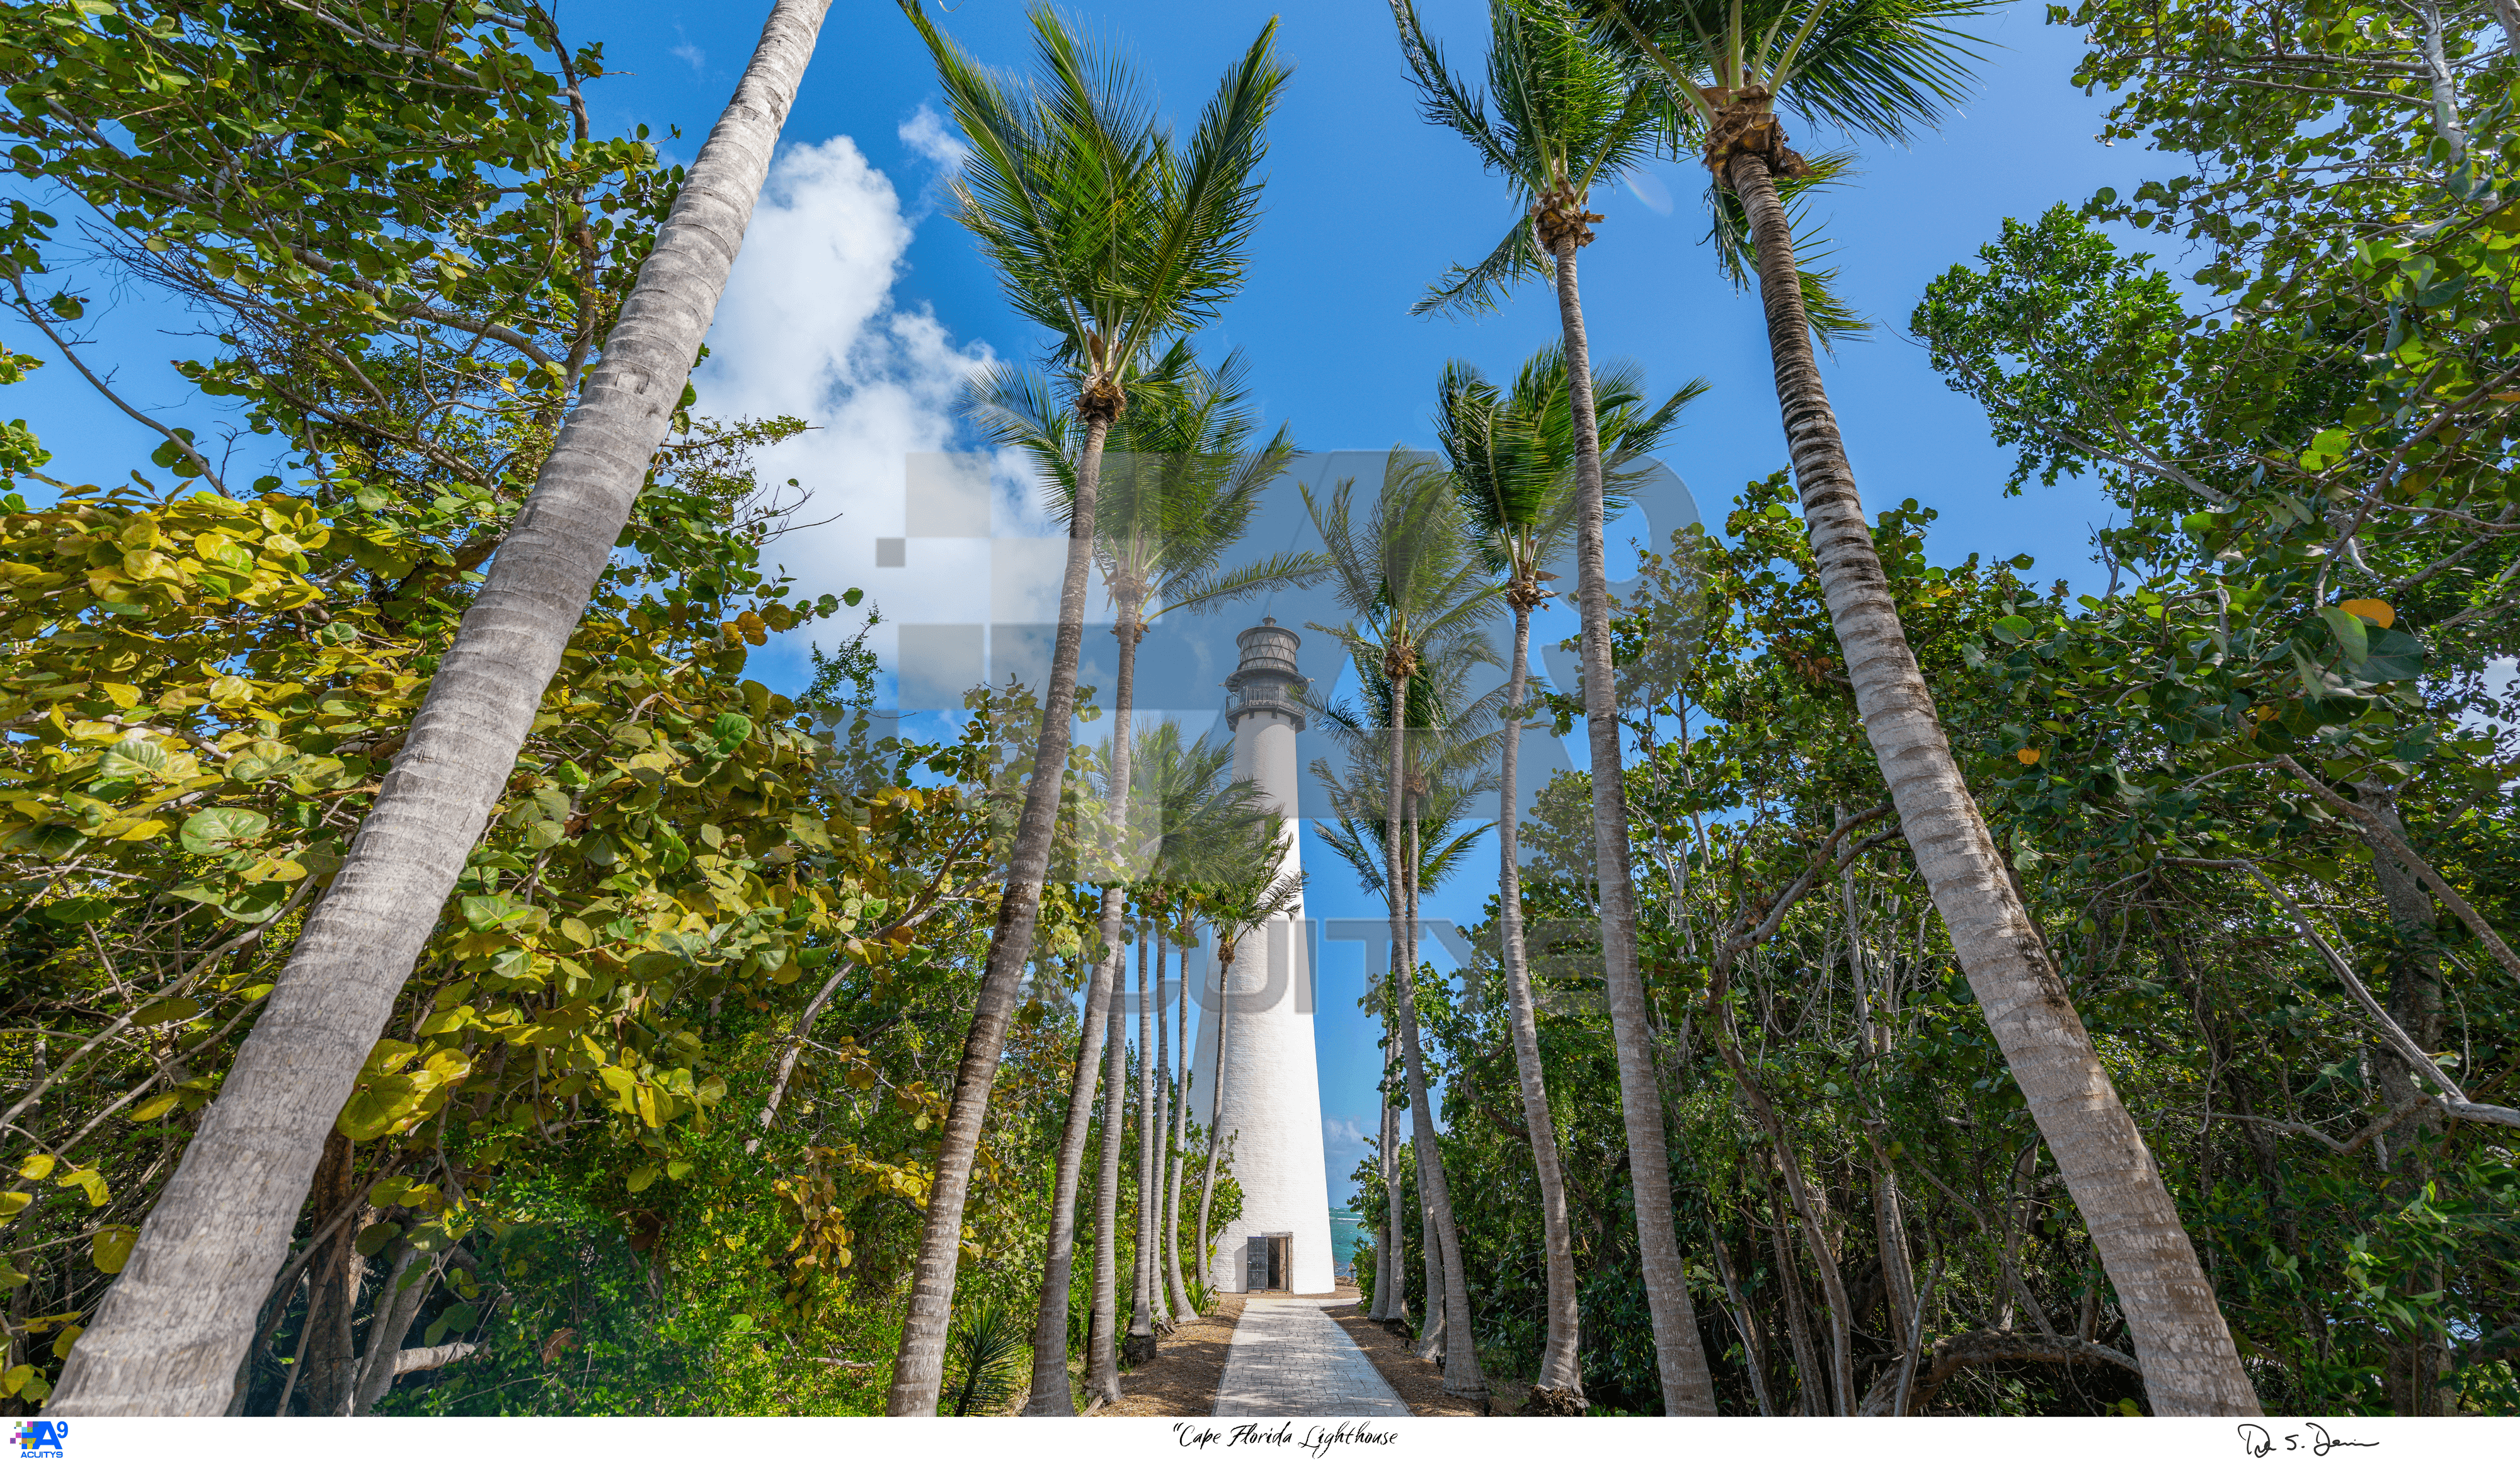 "Cape Florida Lighthouse"